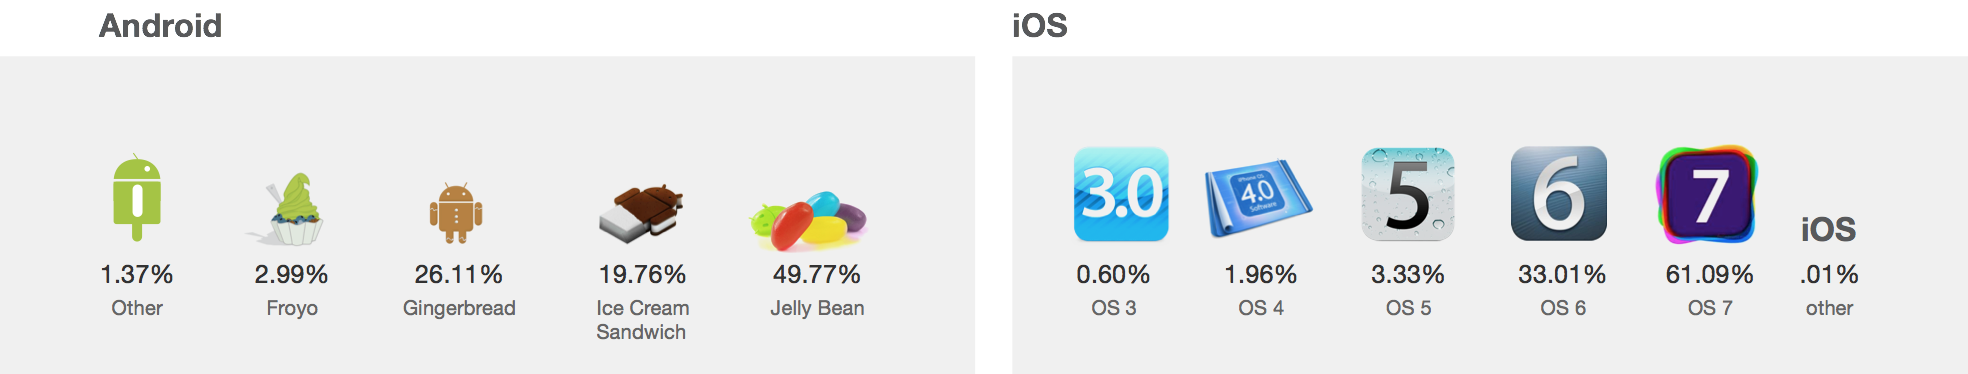 iOS-7-vs-Jelly-bean-usage